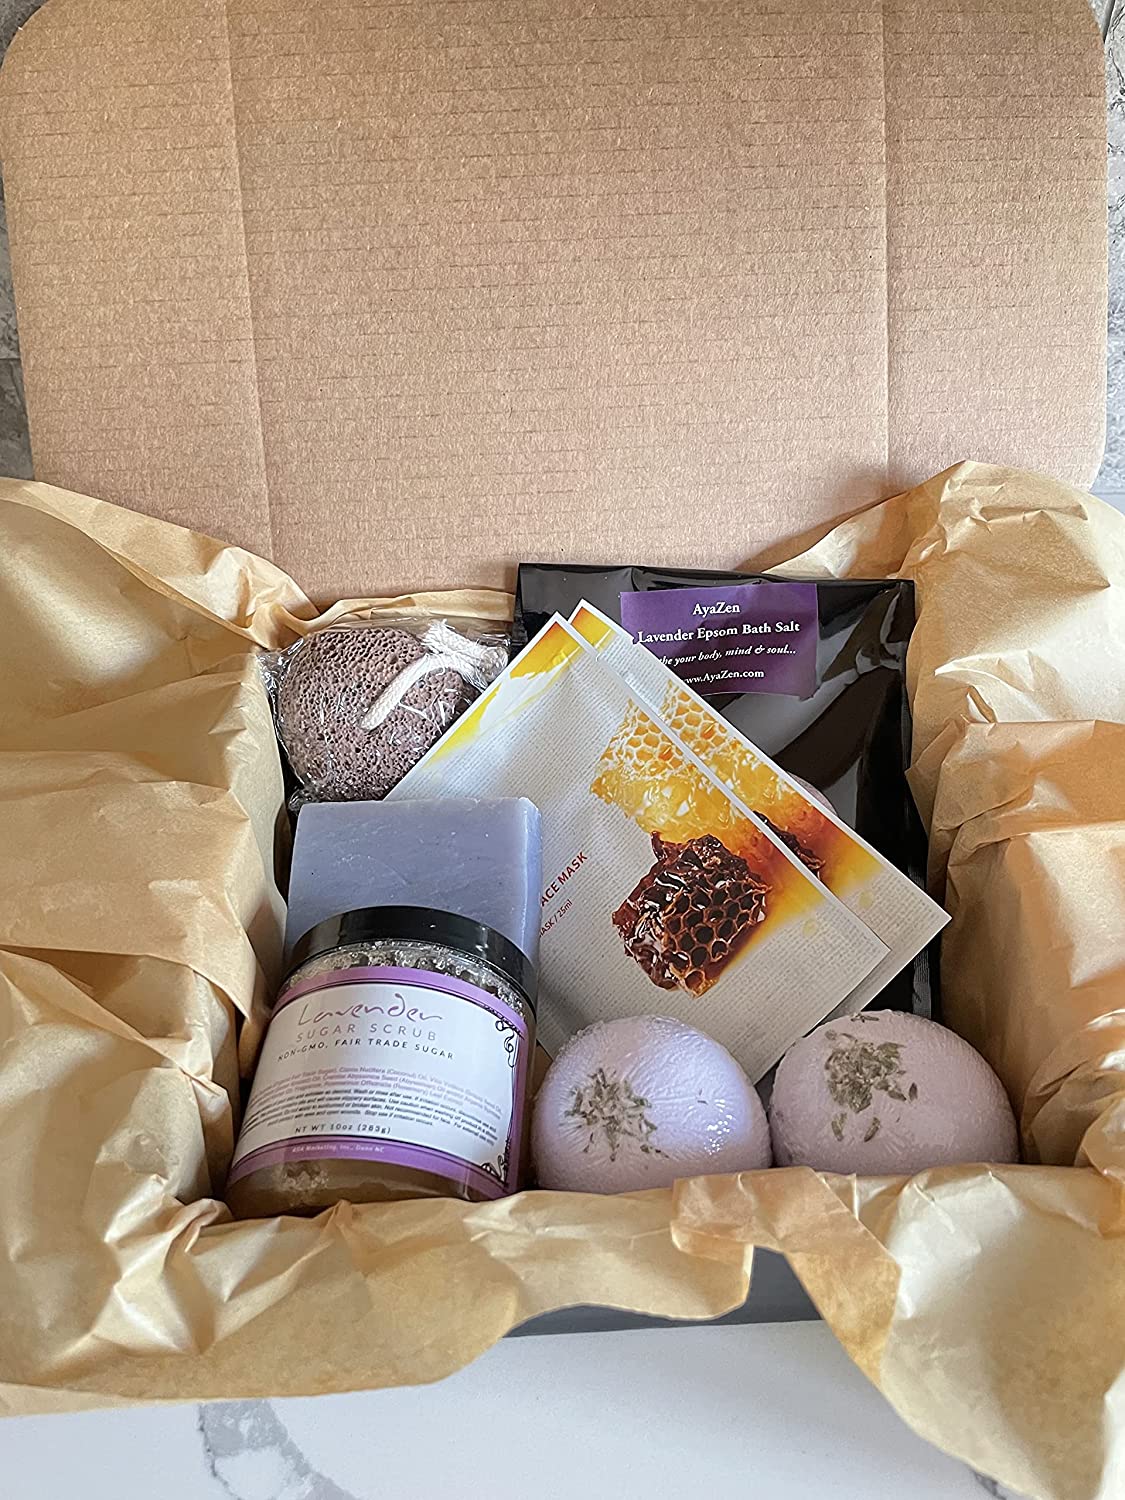 AyaZen Lavender Aromatherapy Relaxation Gift Set